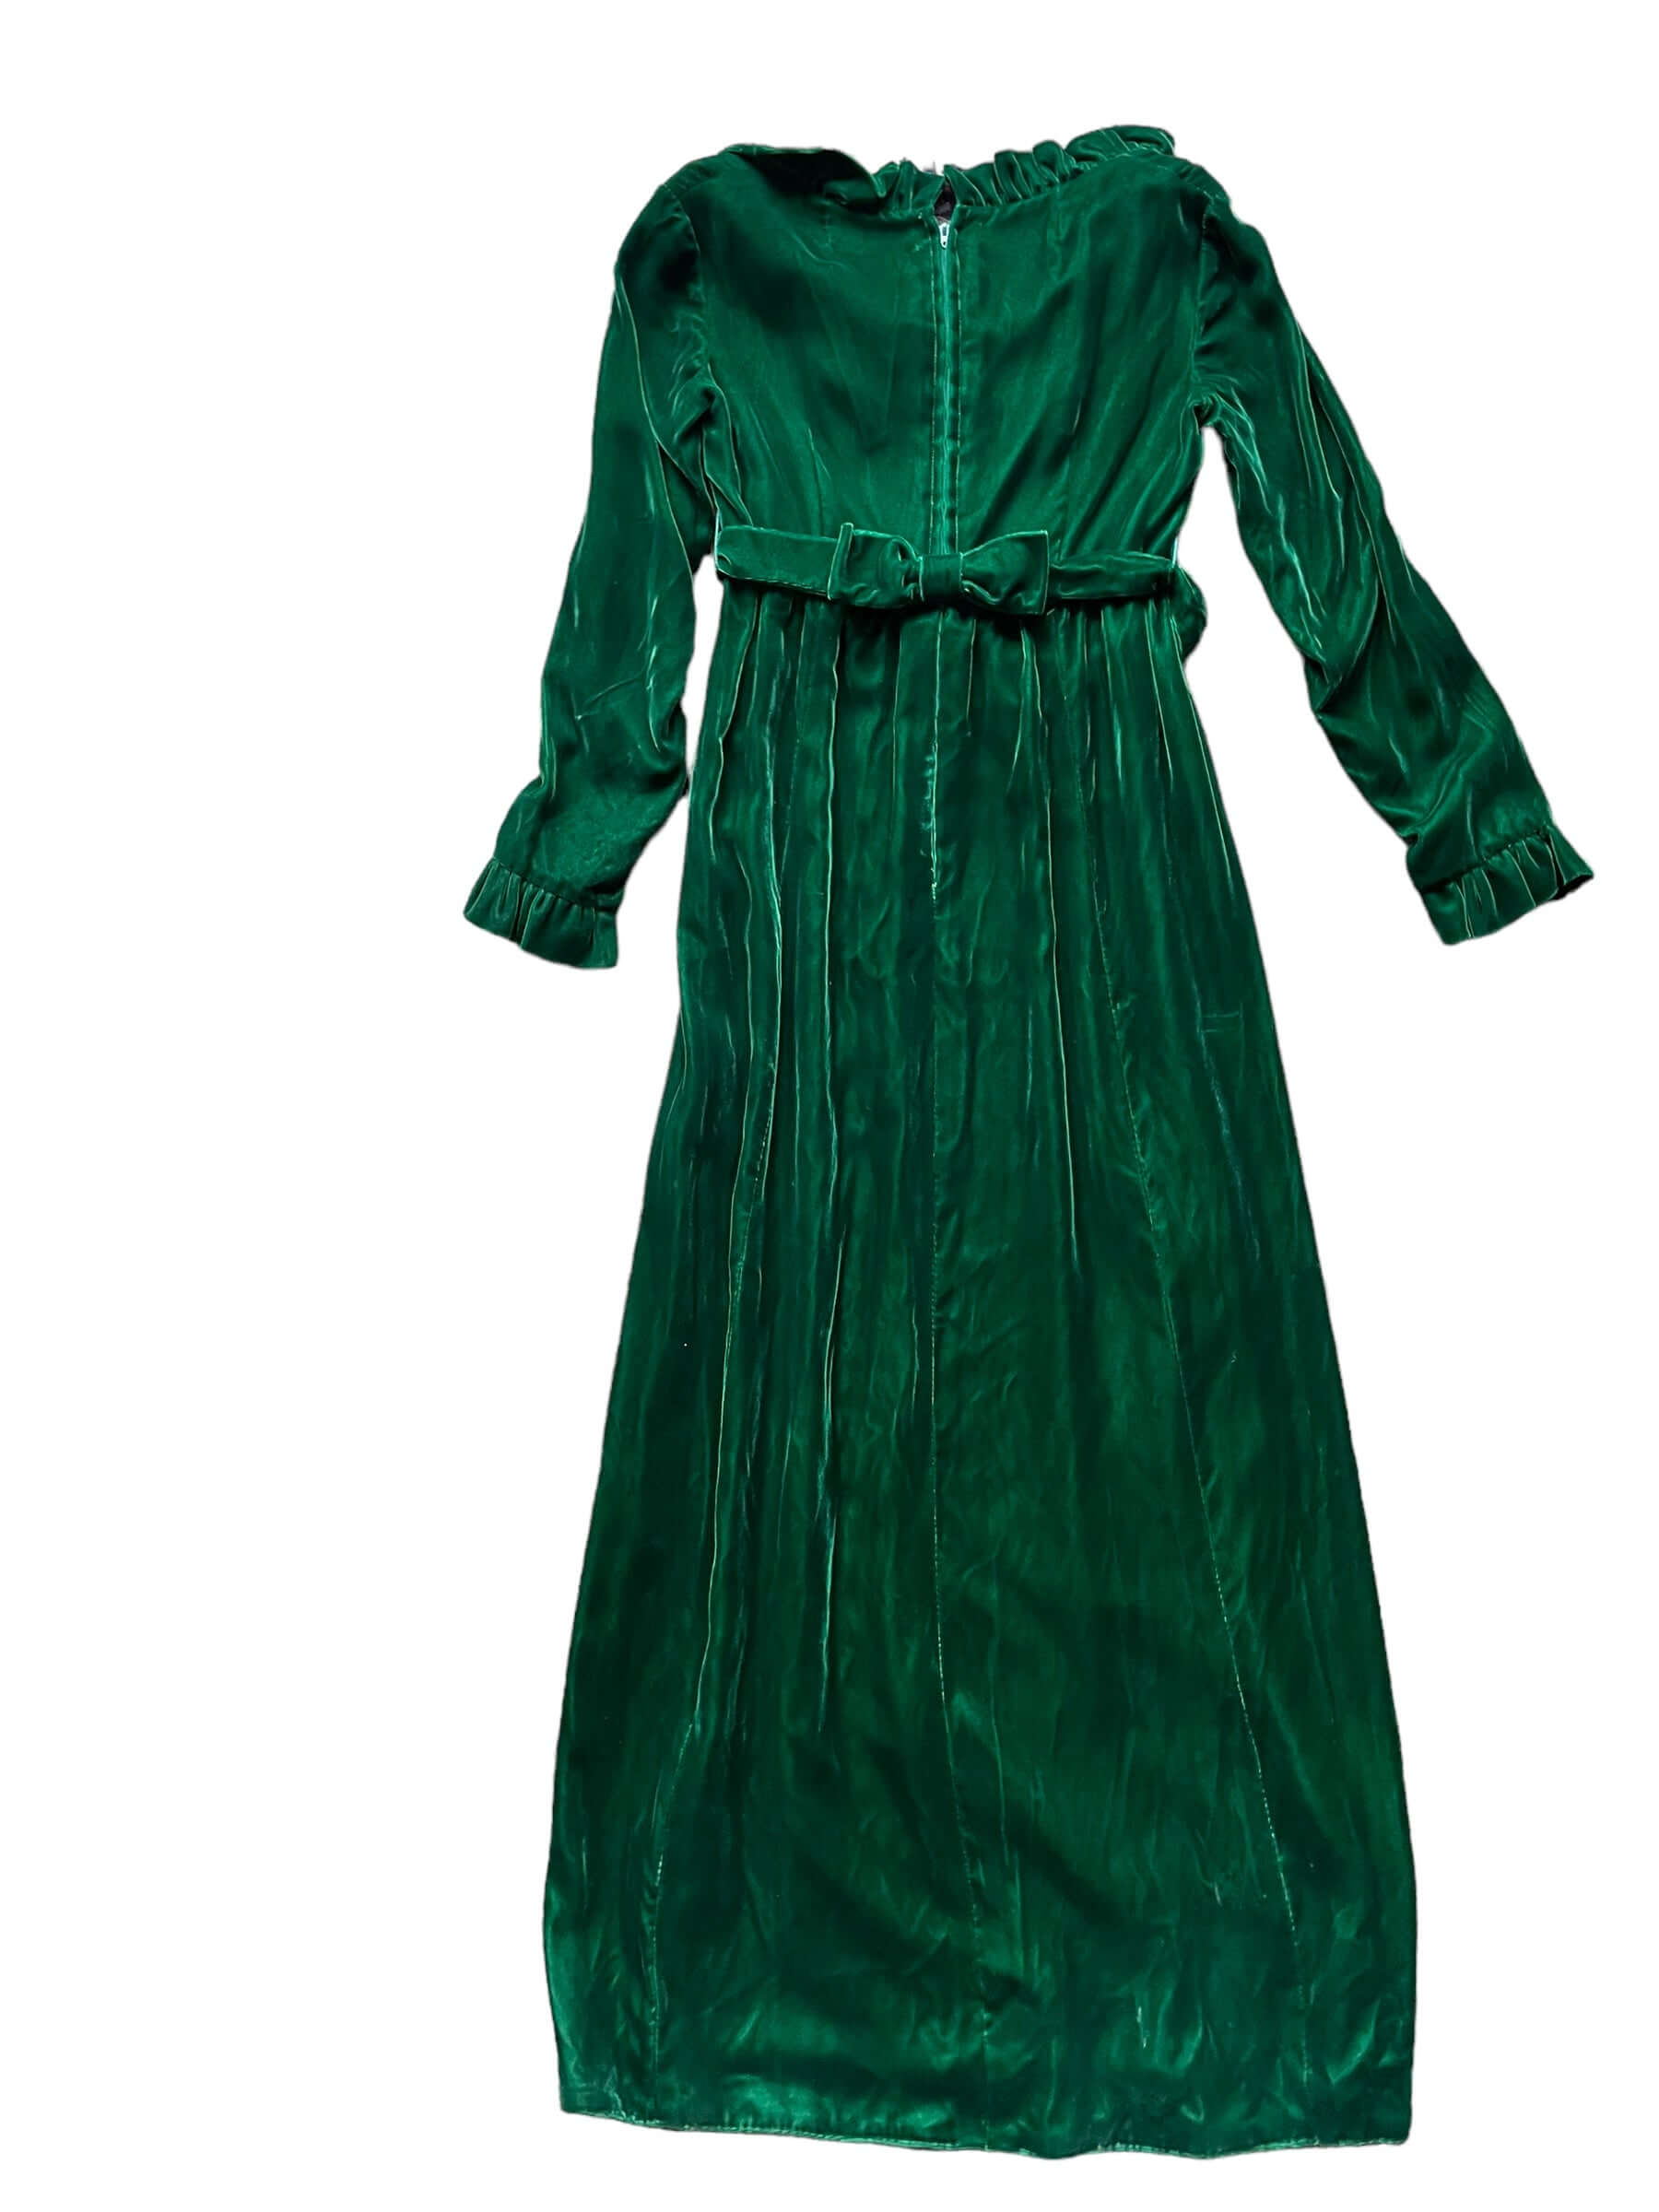 Full back view of Vintage 1960s Green Velvet Dress |  Barn Owl Vintage Dresses | Seattle Vintage Ladies Clothing